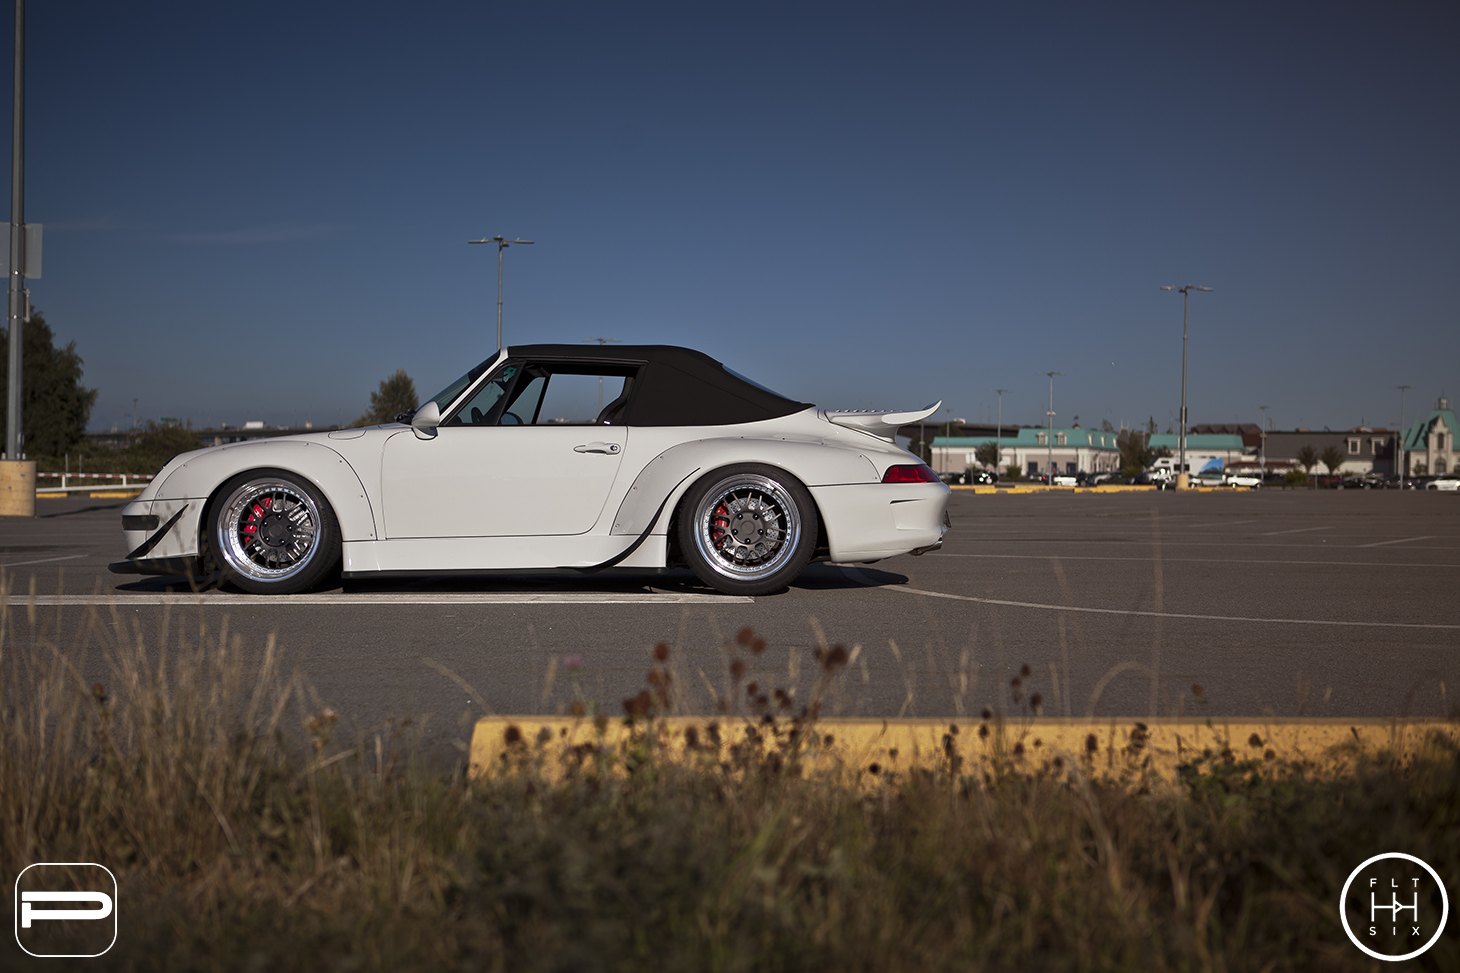 Aftermarket Fender Flares on White Porsche 911 - Photo by PUR Wheels